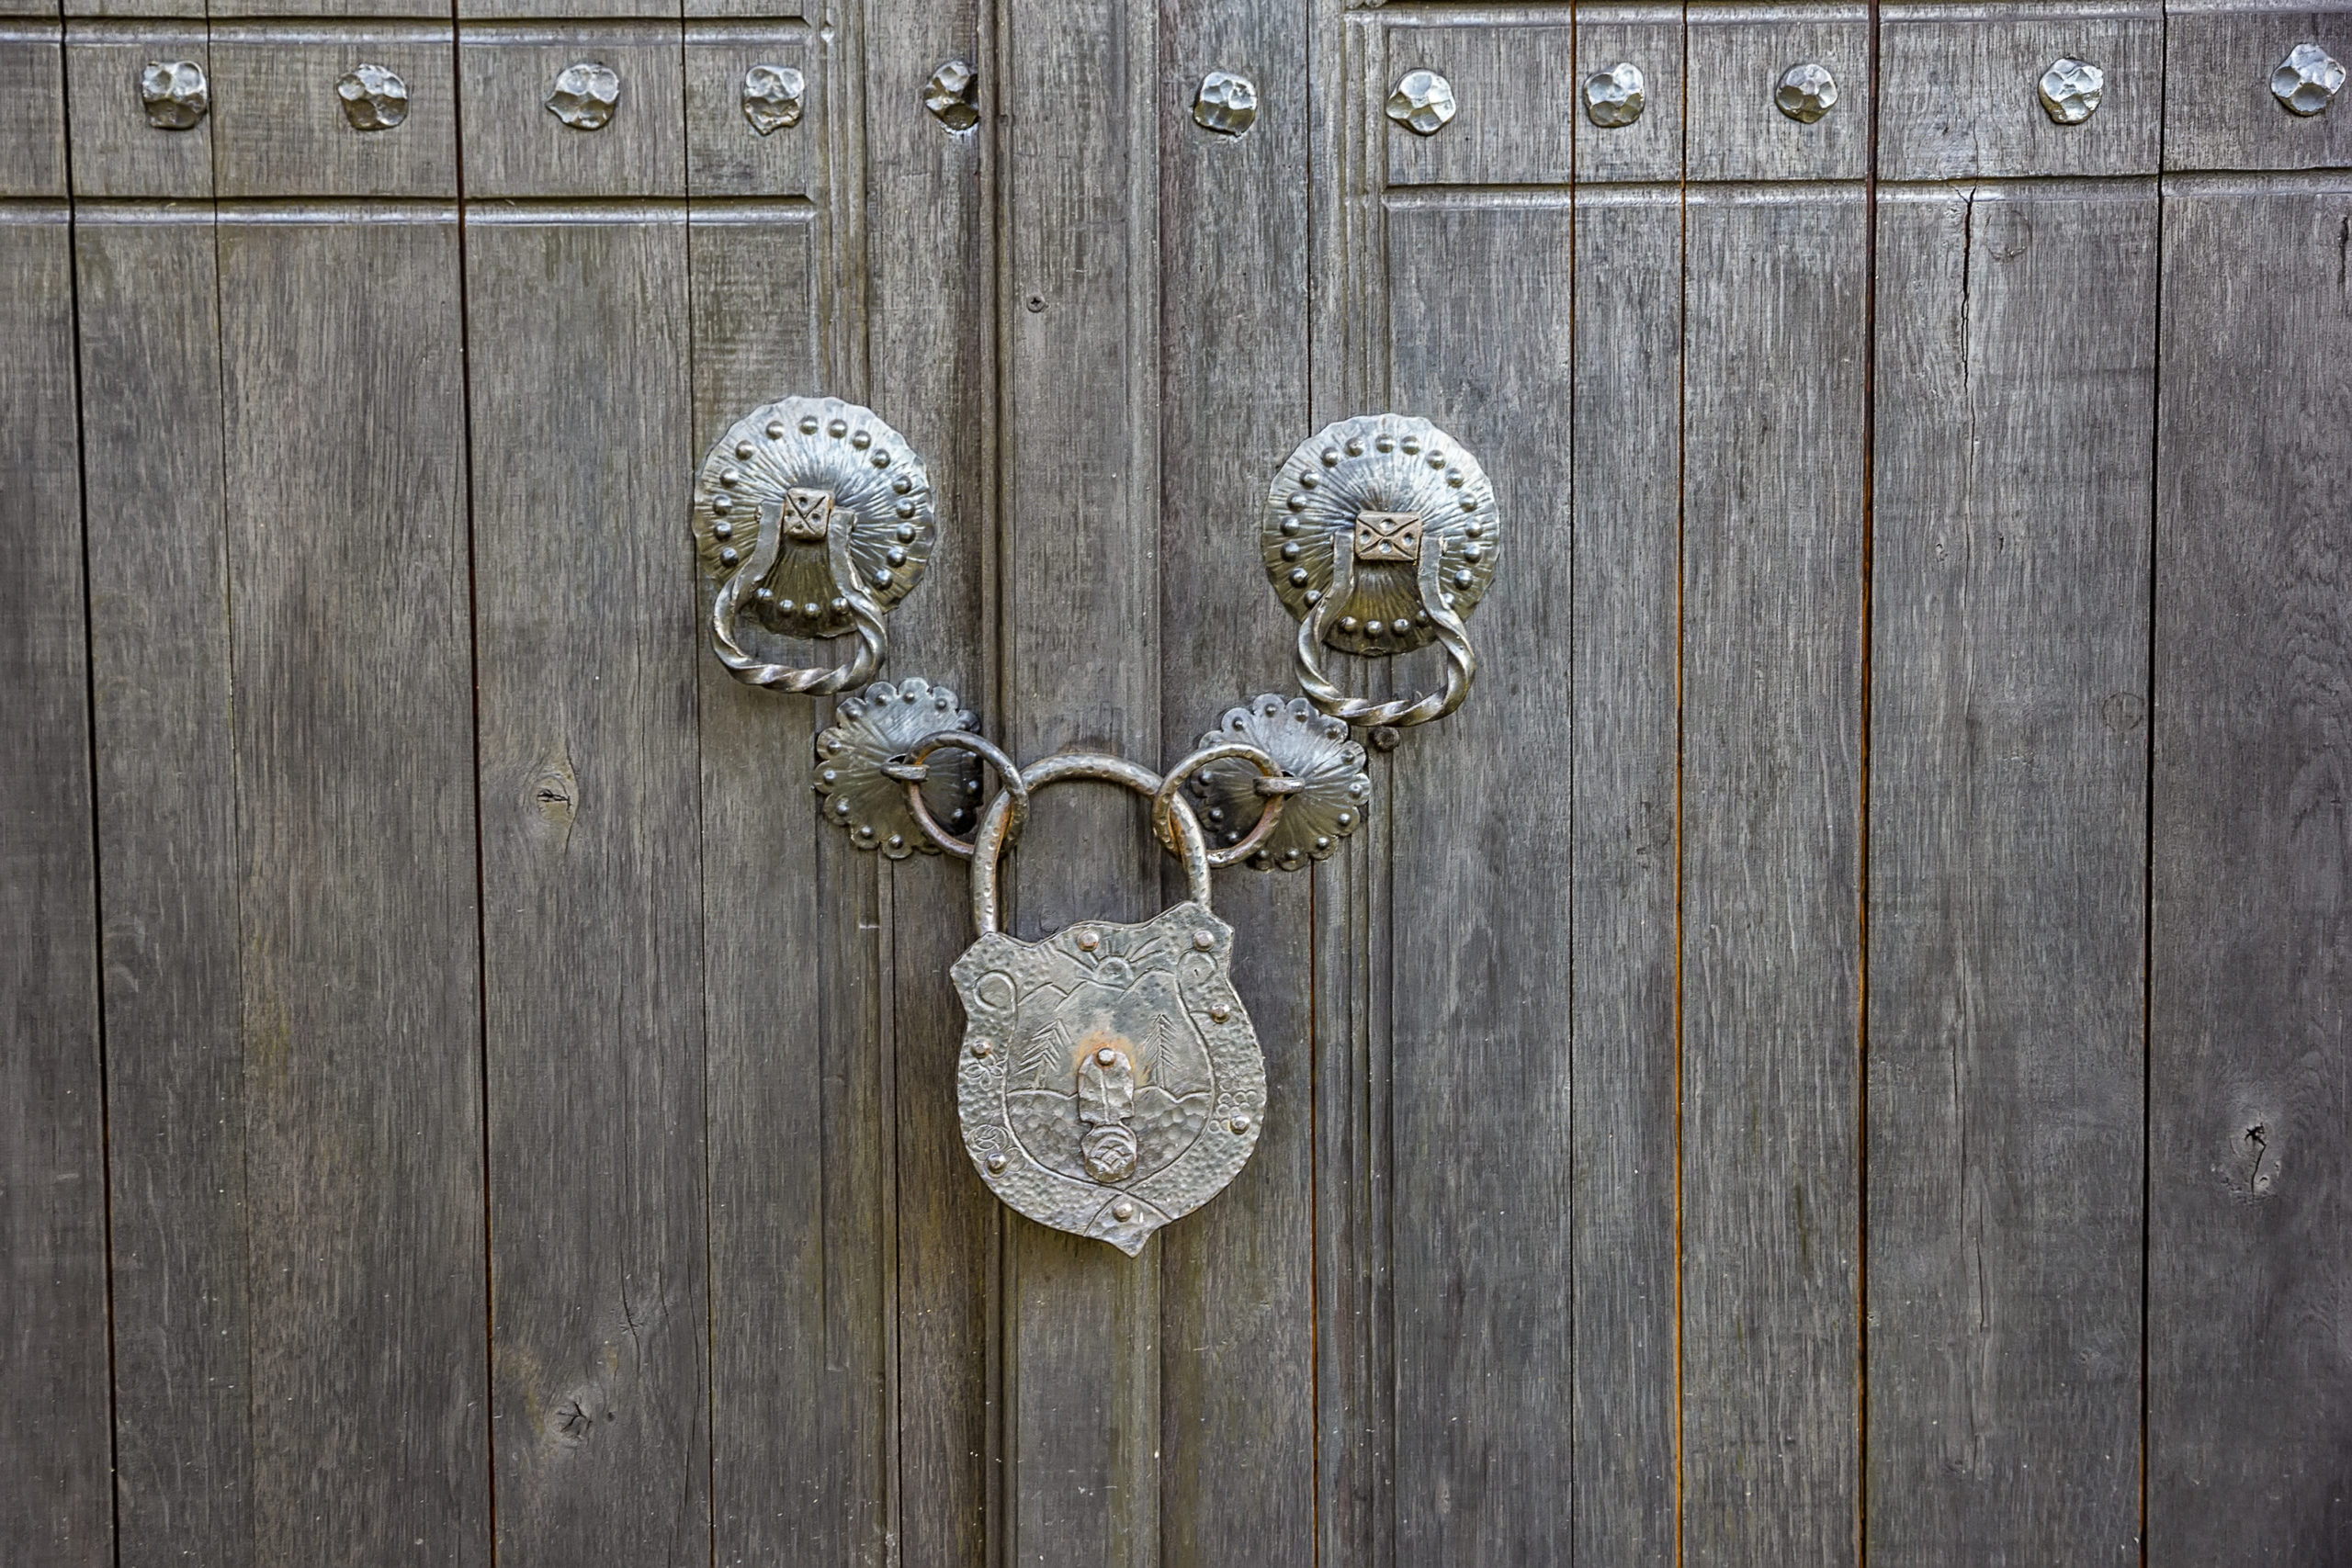 An old wooden door locked with a big vintage padlock. True vintage style